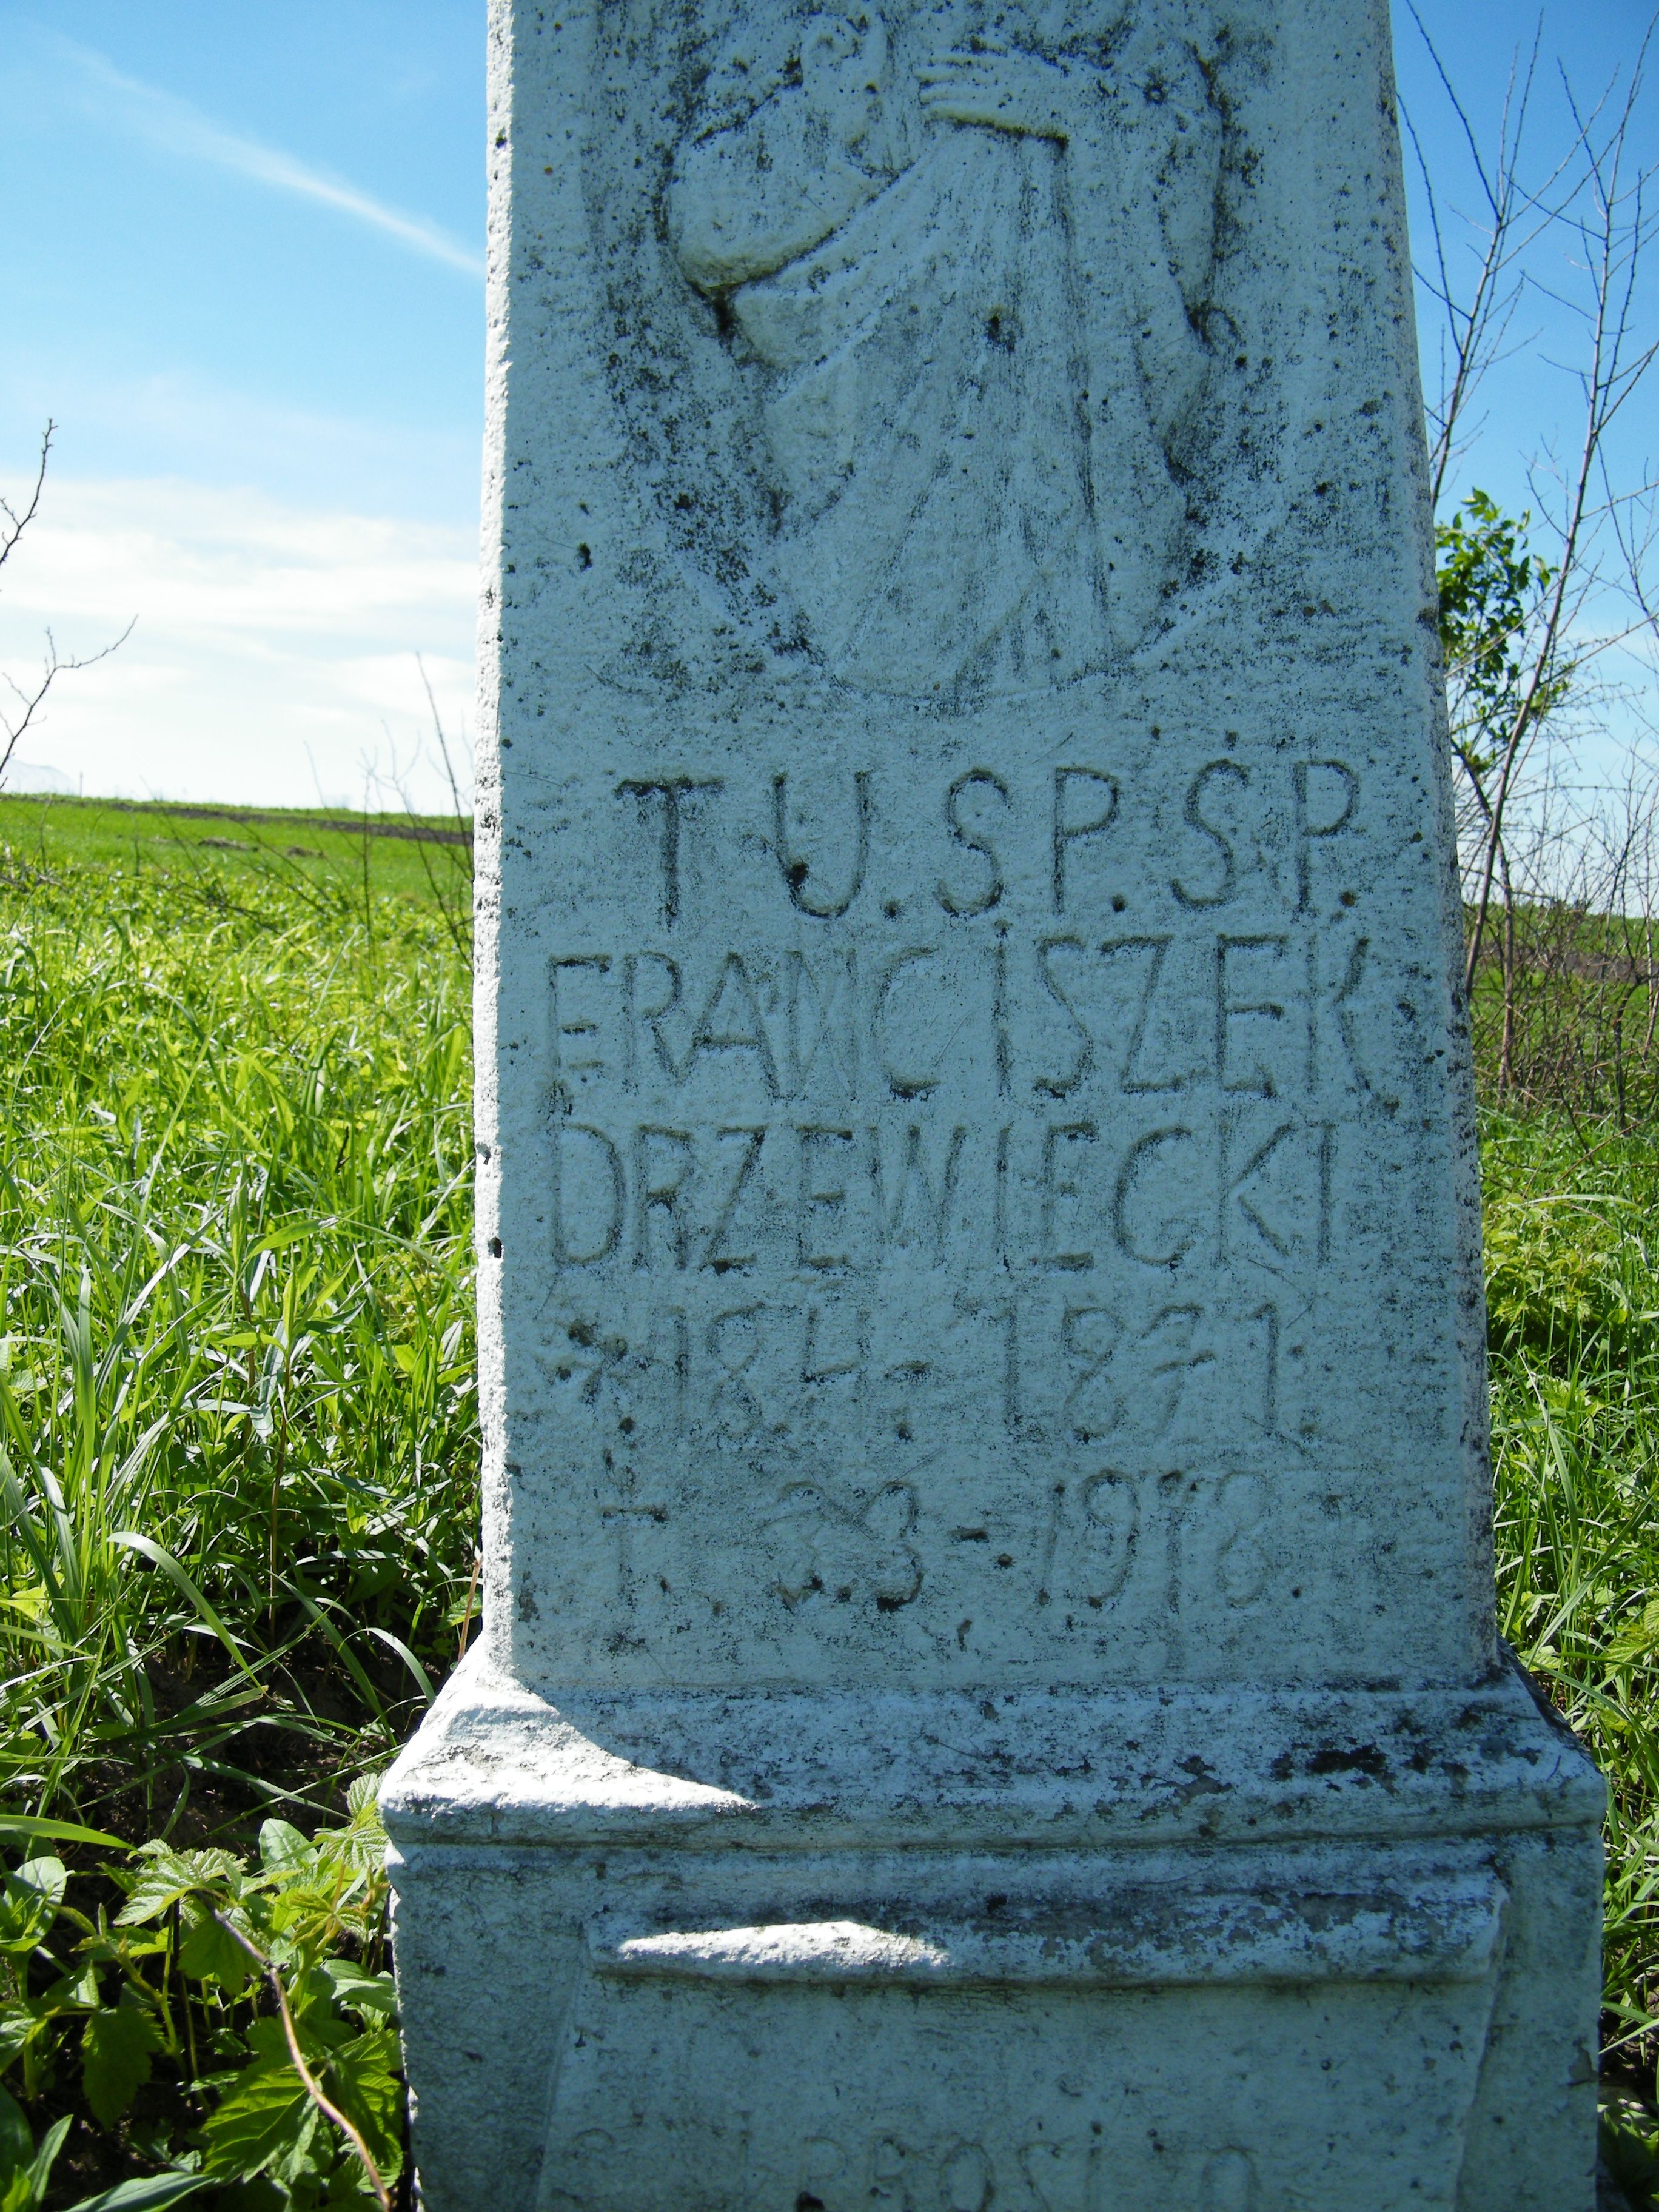 Inscription from the gravestone of Franciszek Drzewiecki, cemetery in Ihrowica